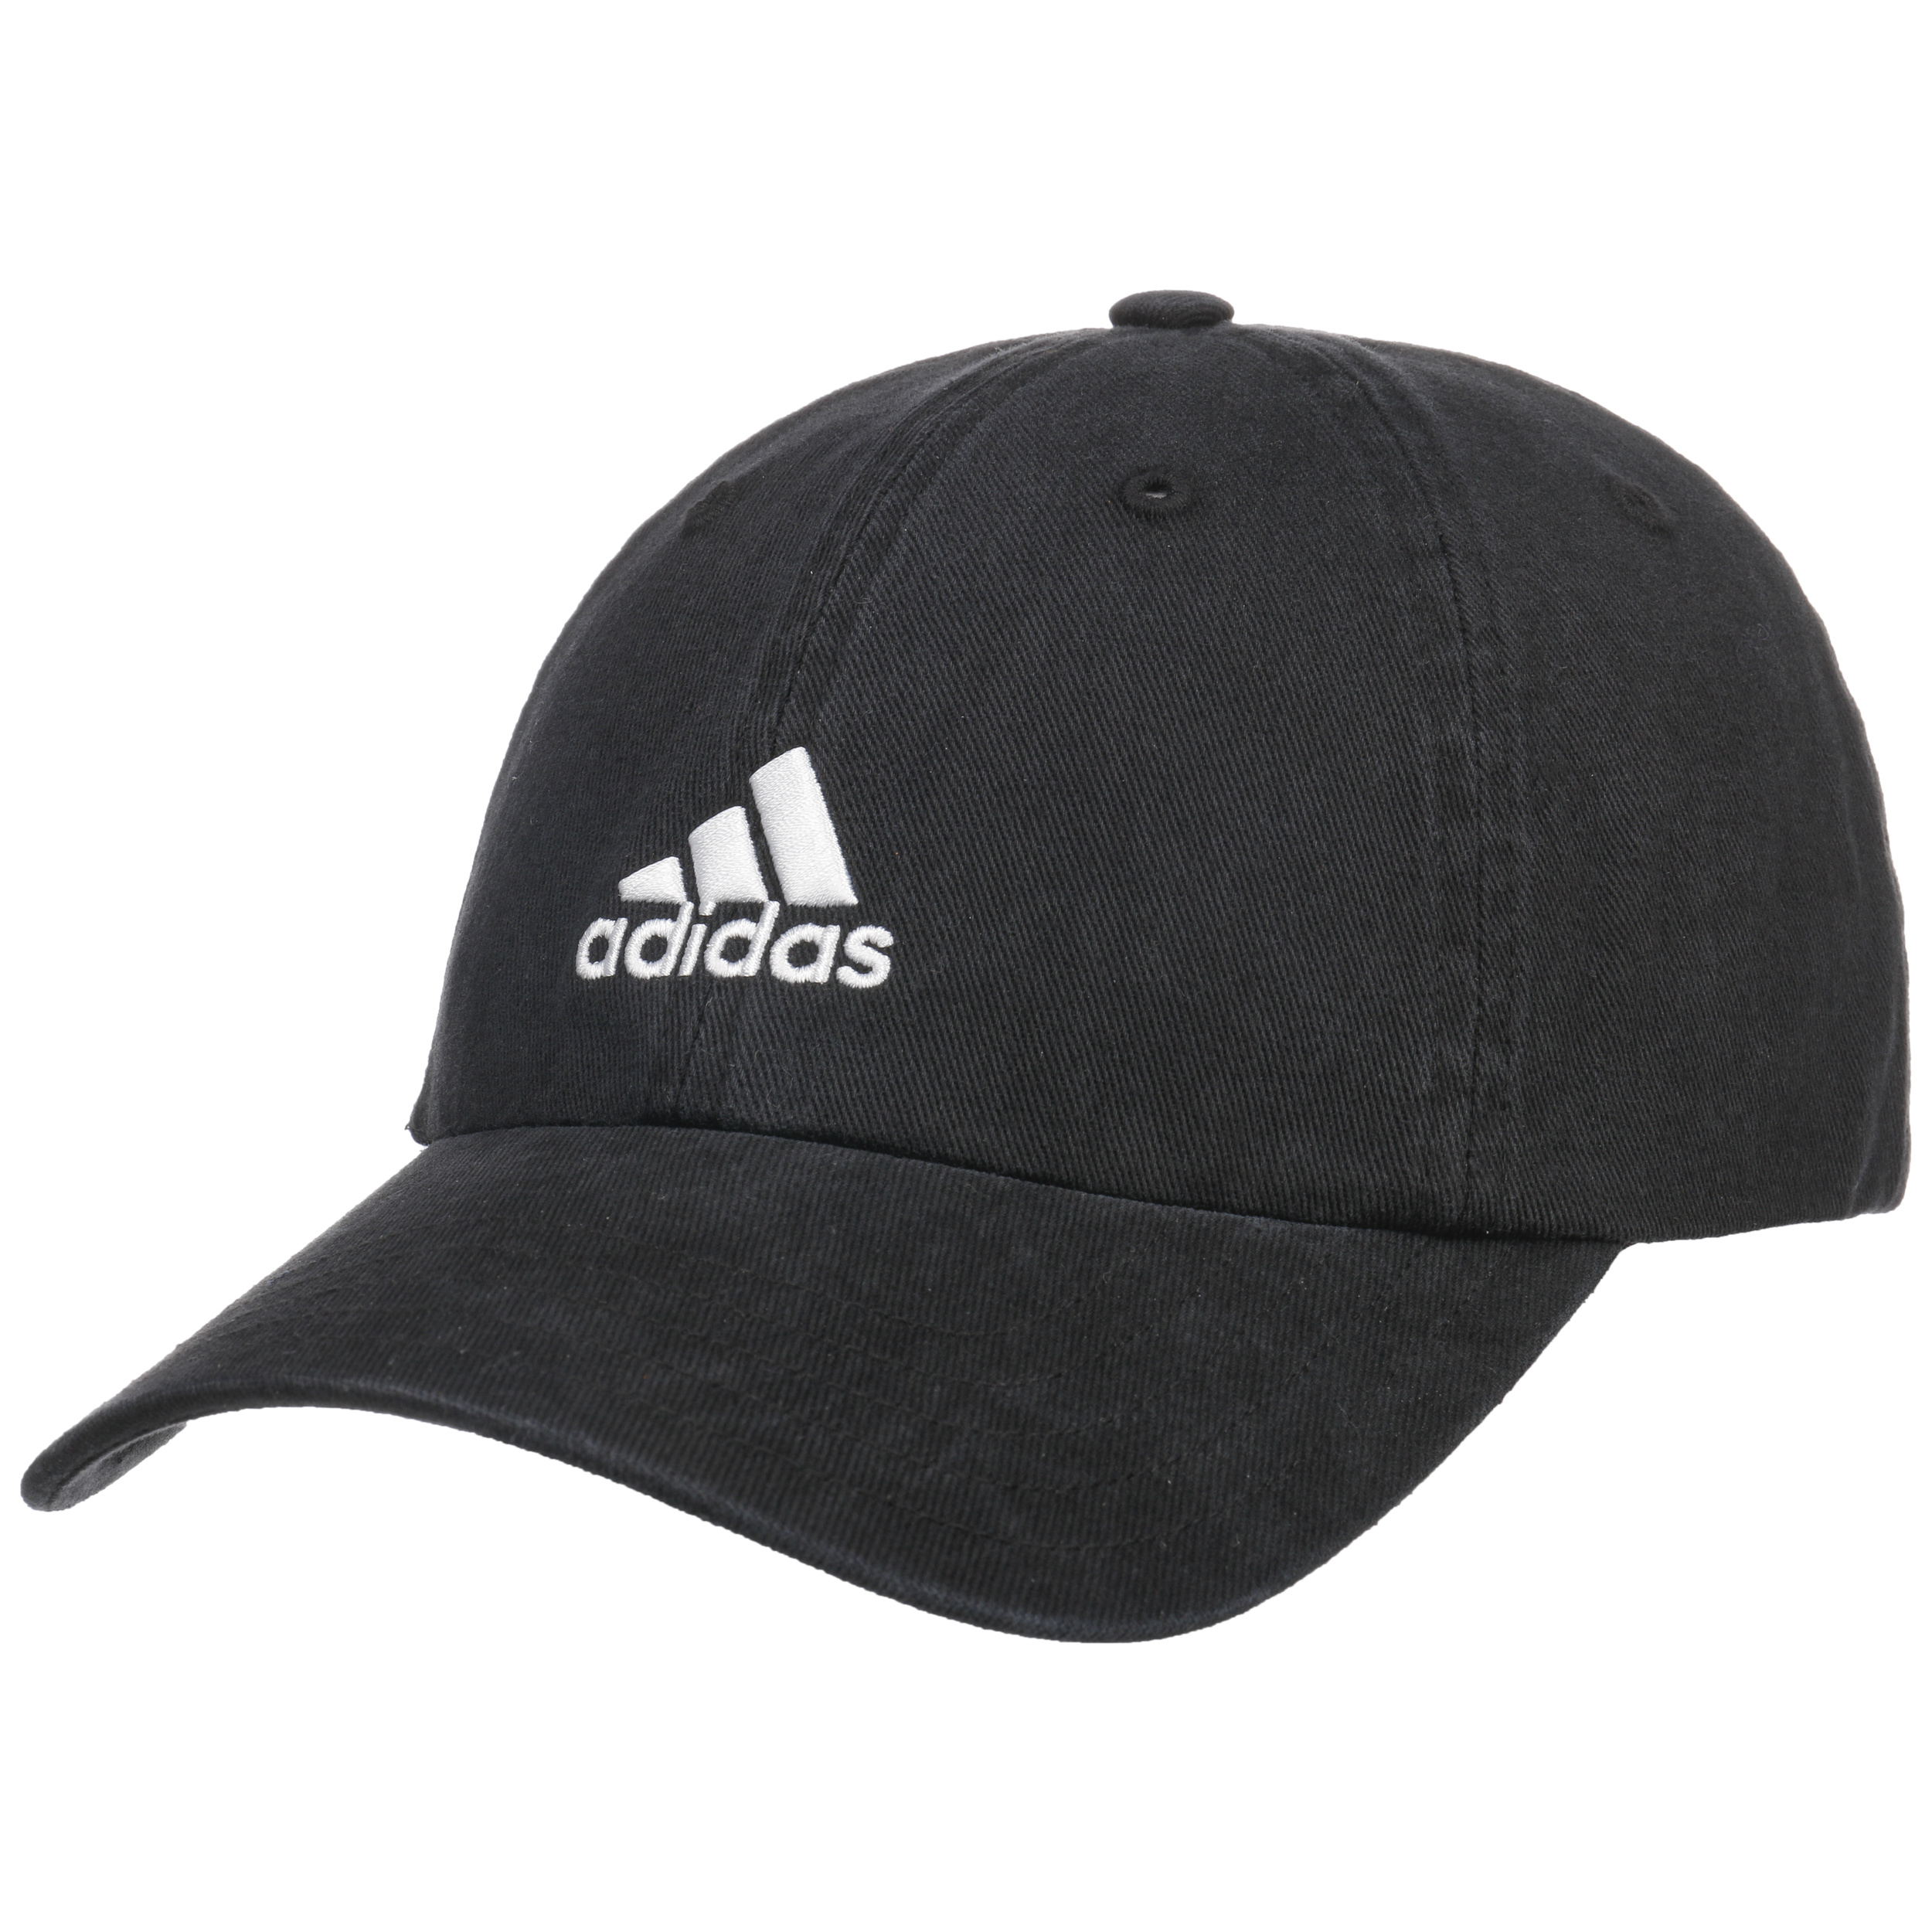 black adidas dad hat